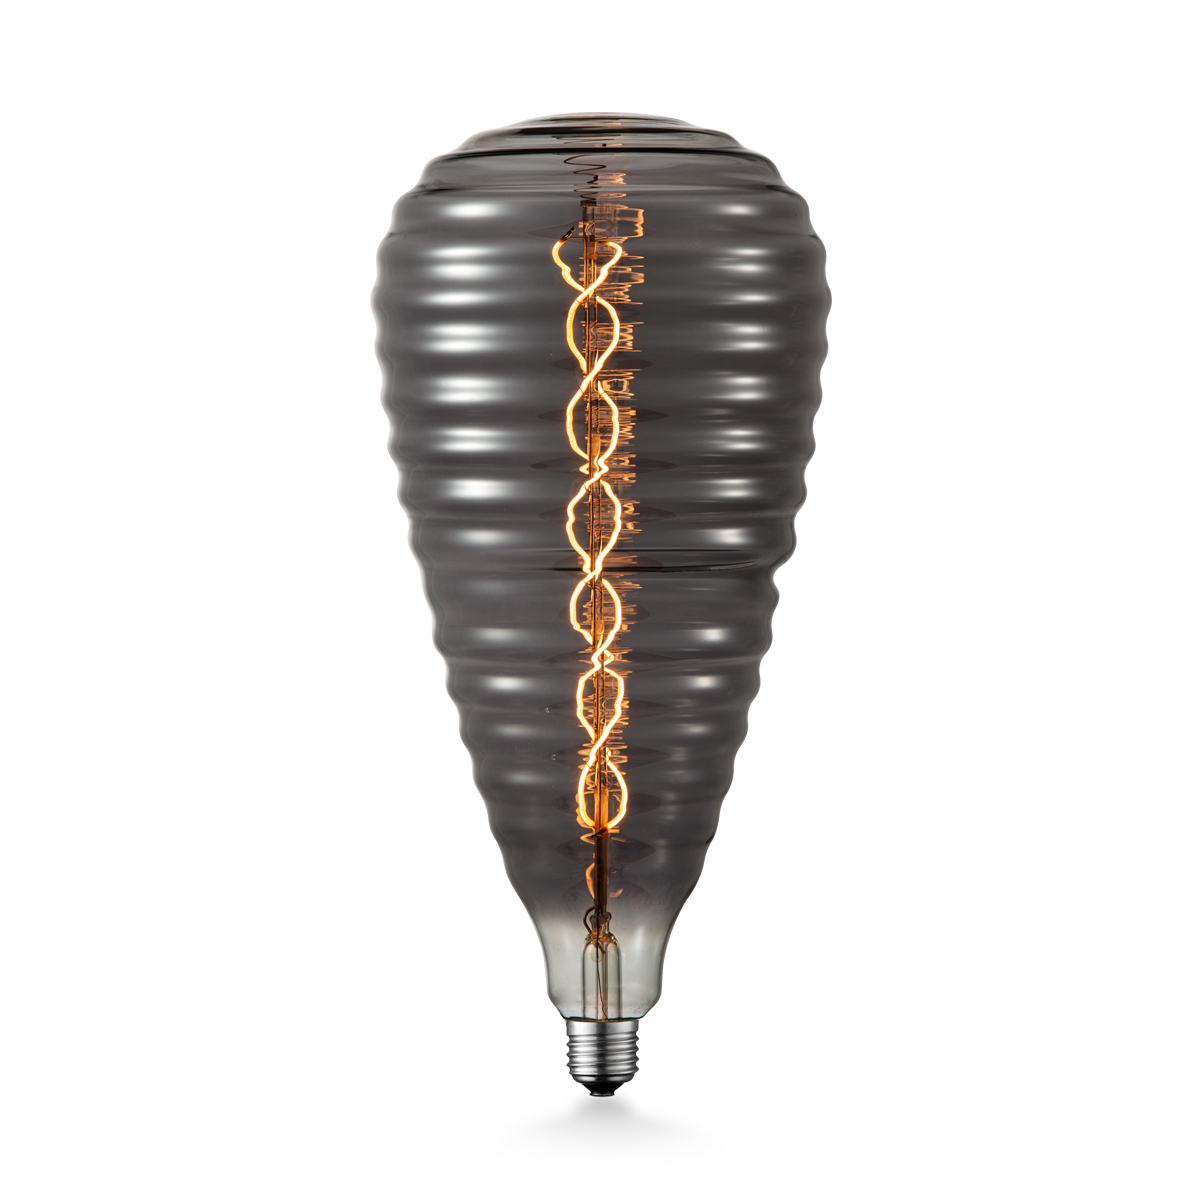 Tangla lighting - TLB-8058-06TM - LED Light Bulb Double Spiral filament - special 4W titanium - medium - pupa - dimmable - E27